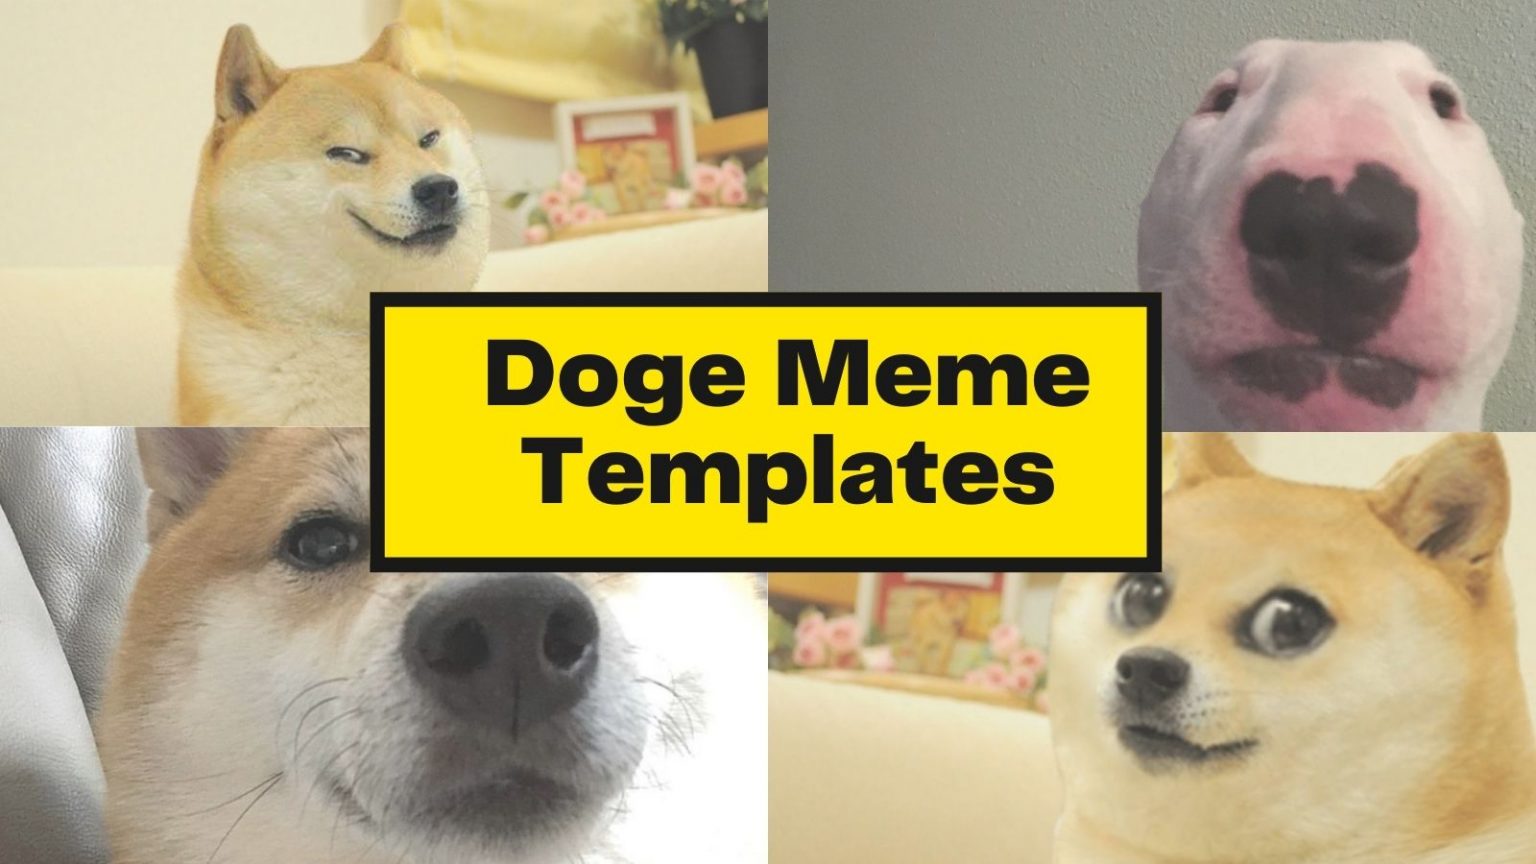 Top 20 Doge Meme Templates Of All Time - HumorNama